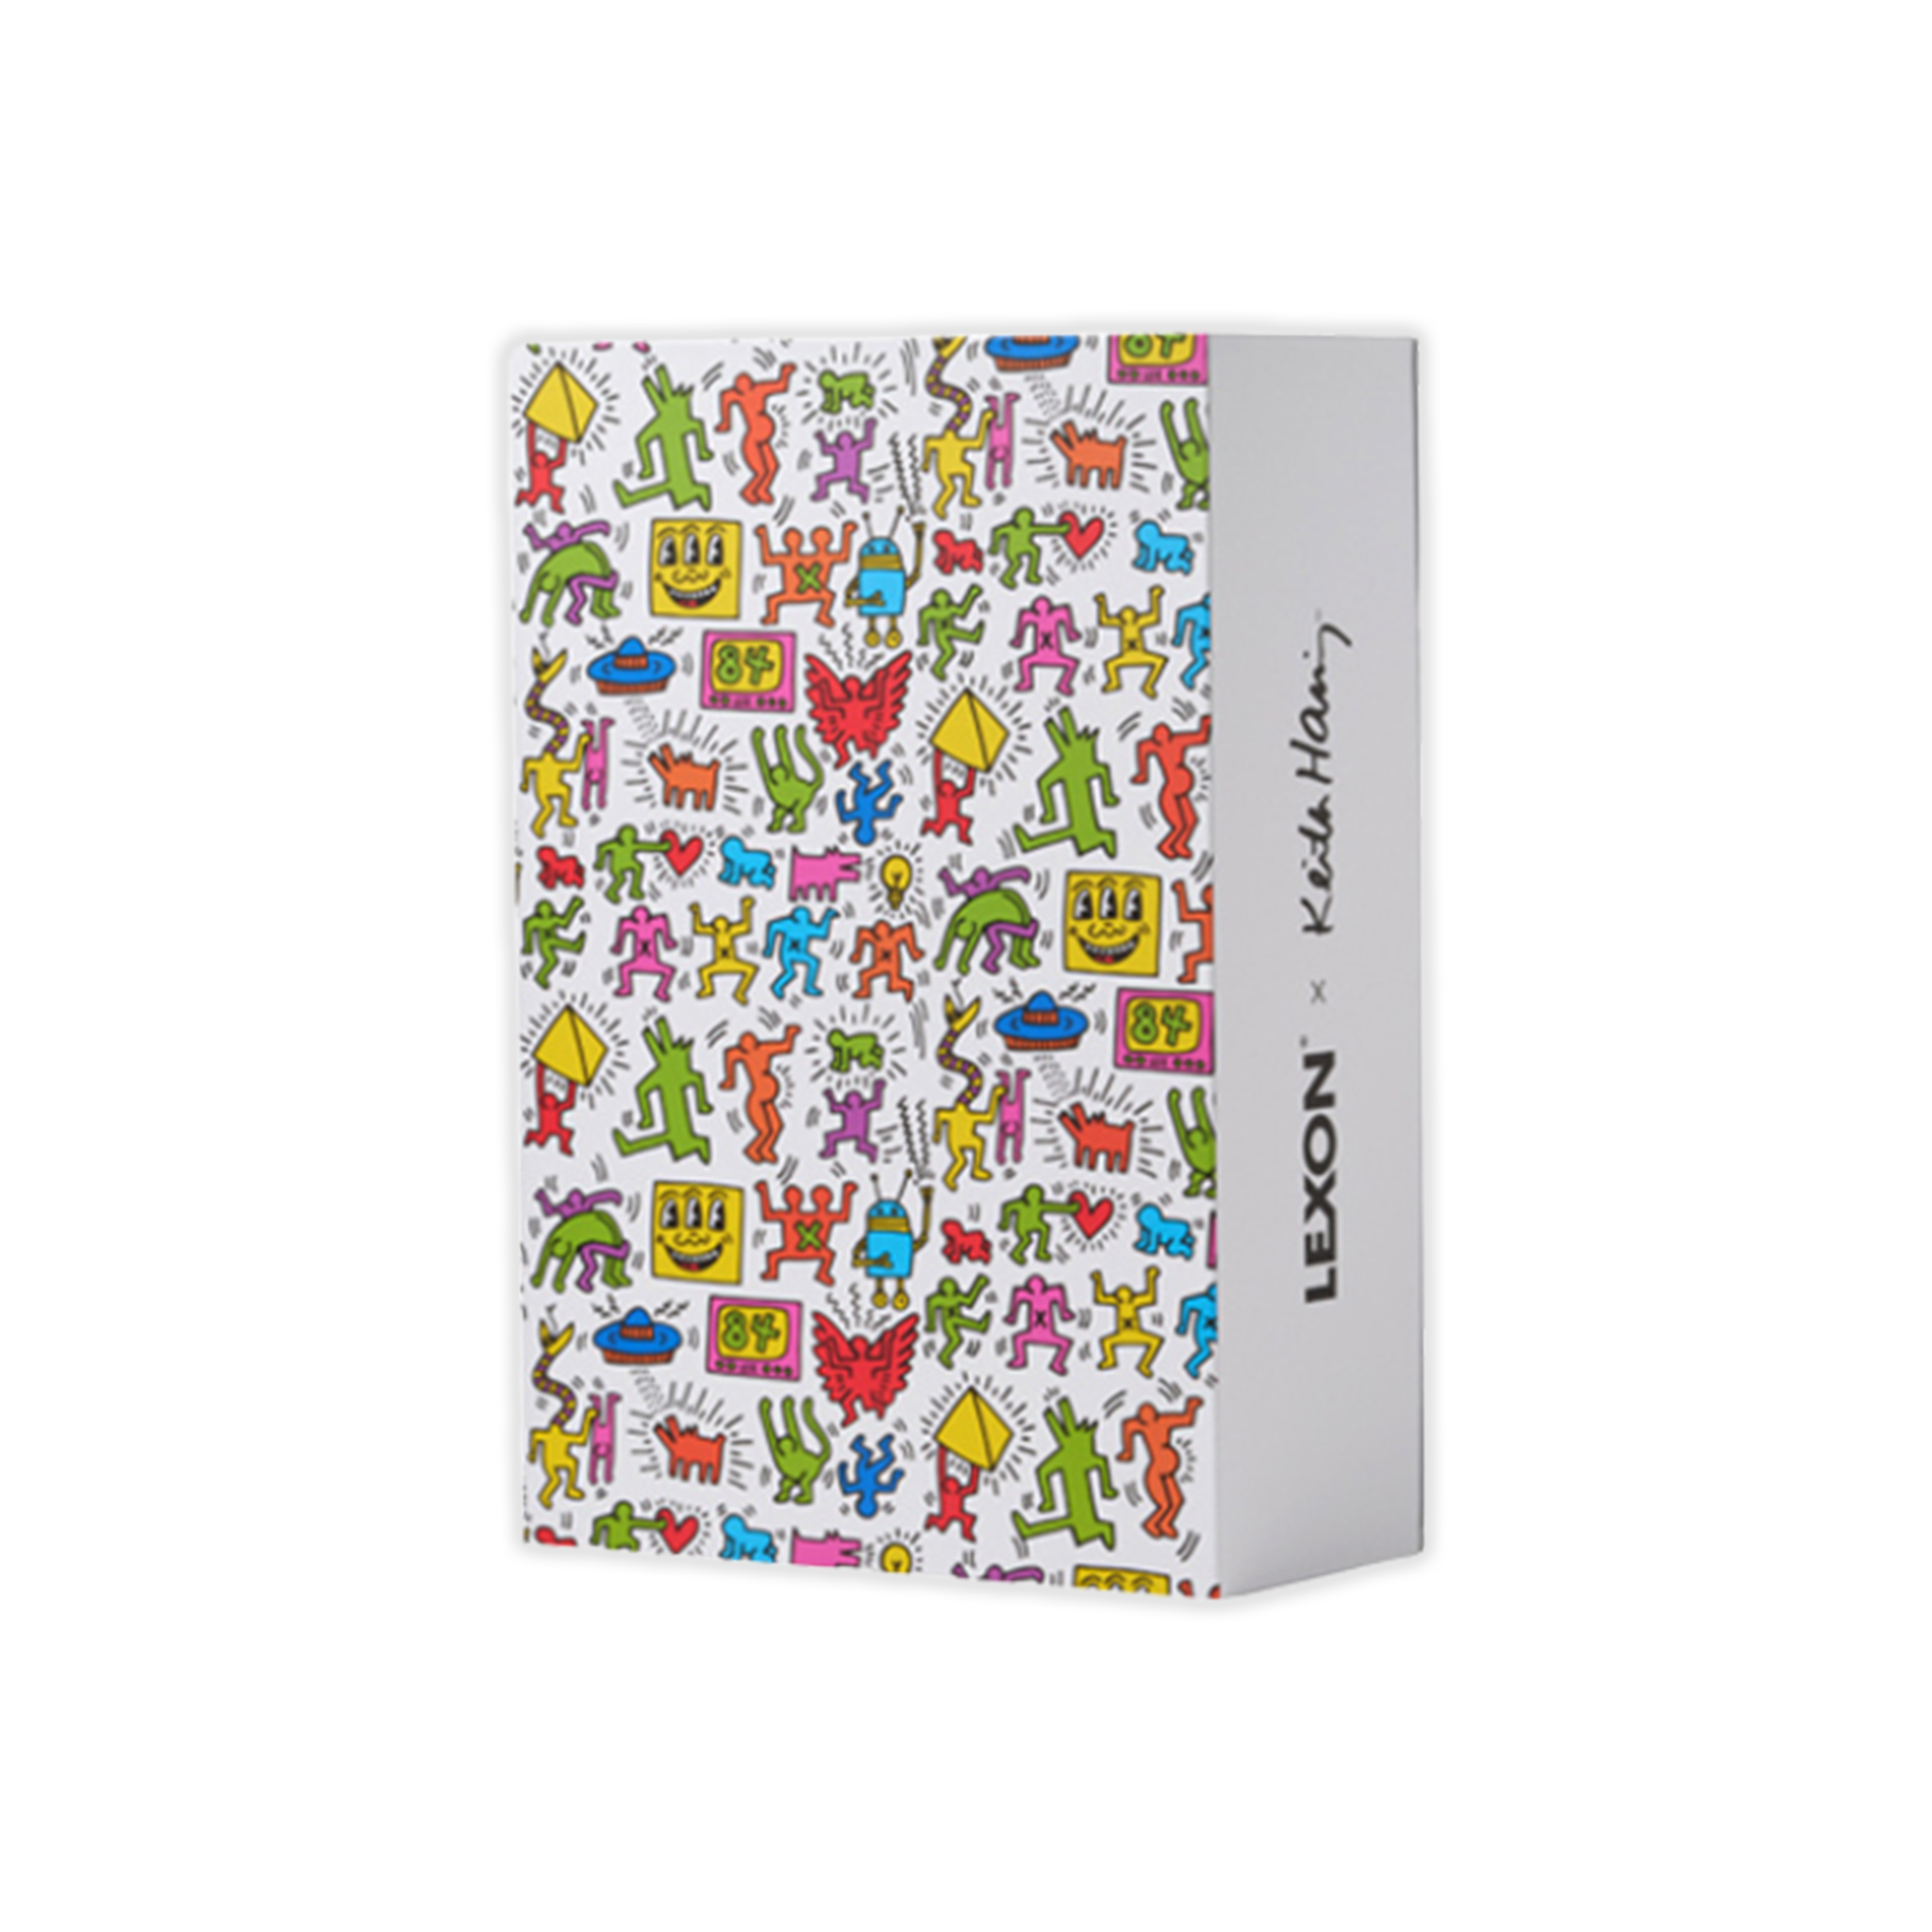 Lexon x Keith Haring Happy Gift Set